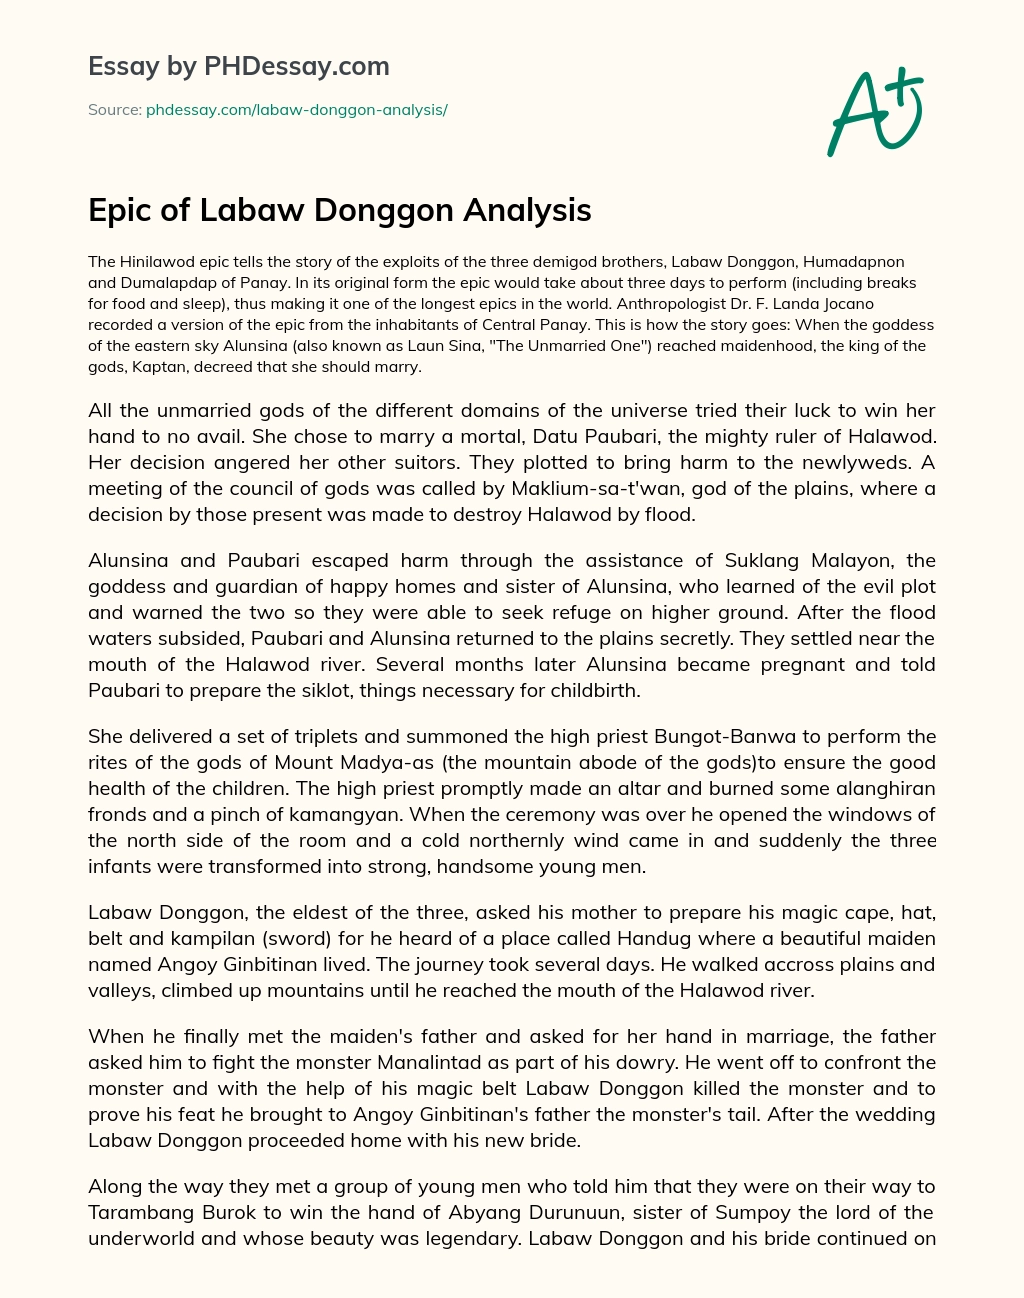 Epic of Labaw Donggon Analysis essay